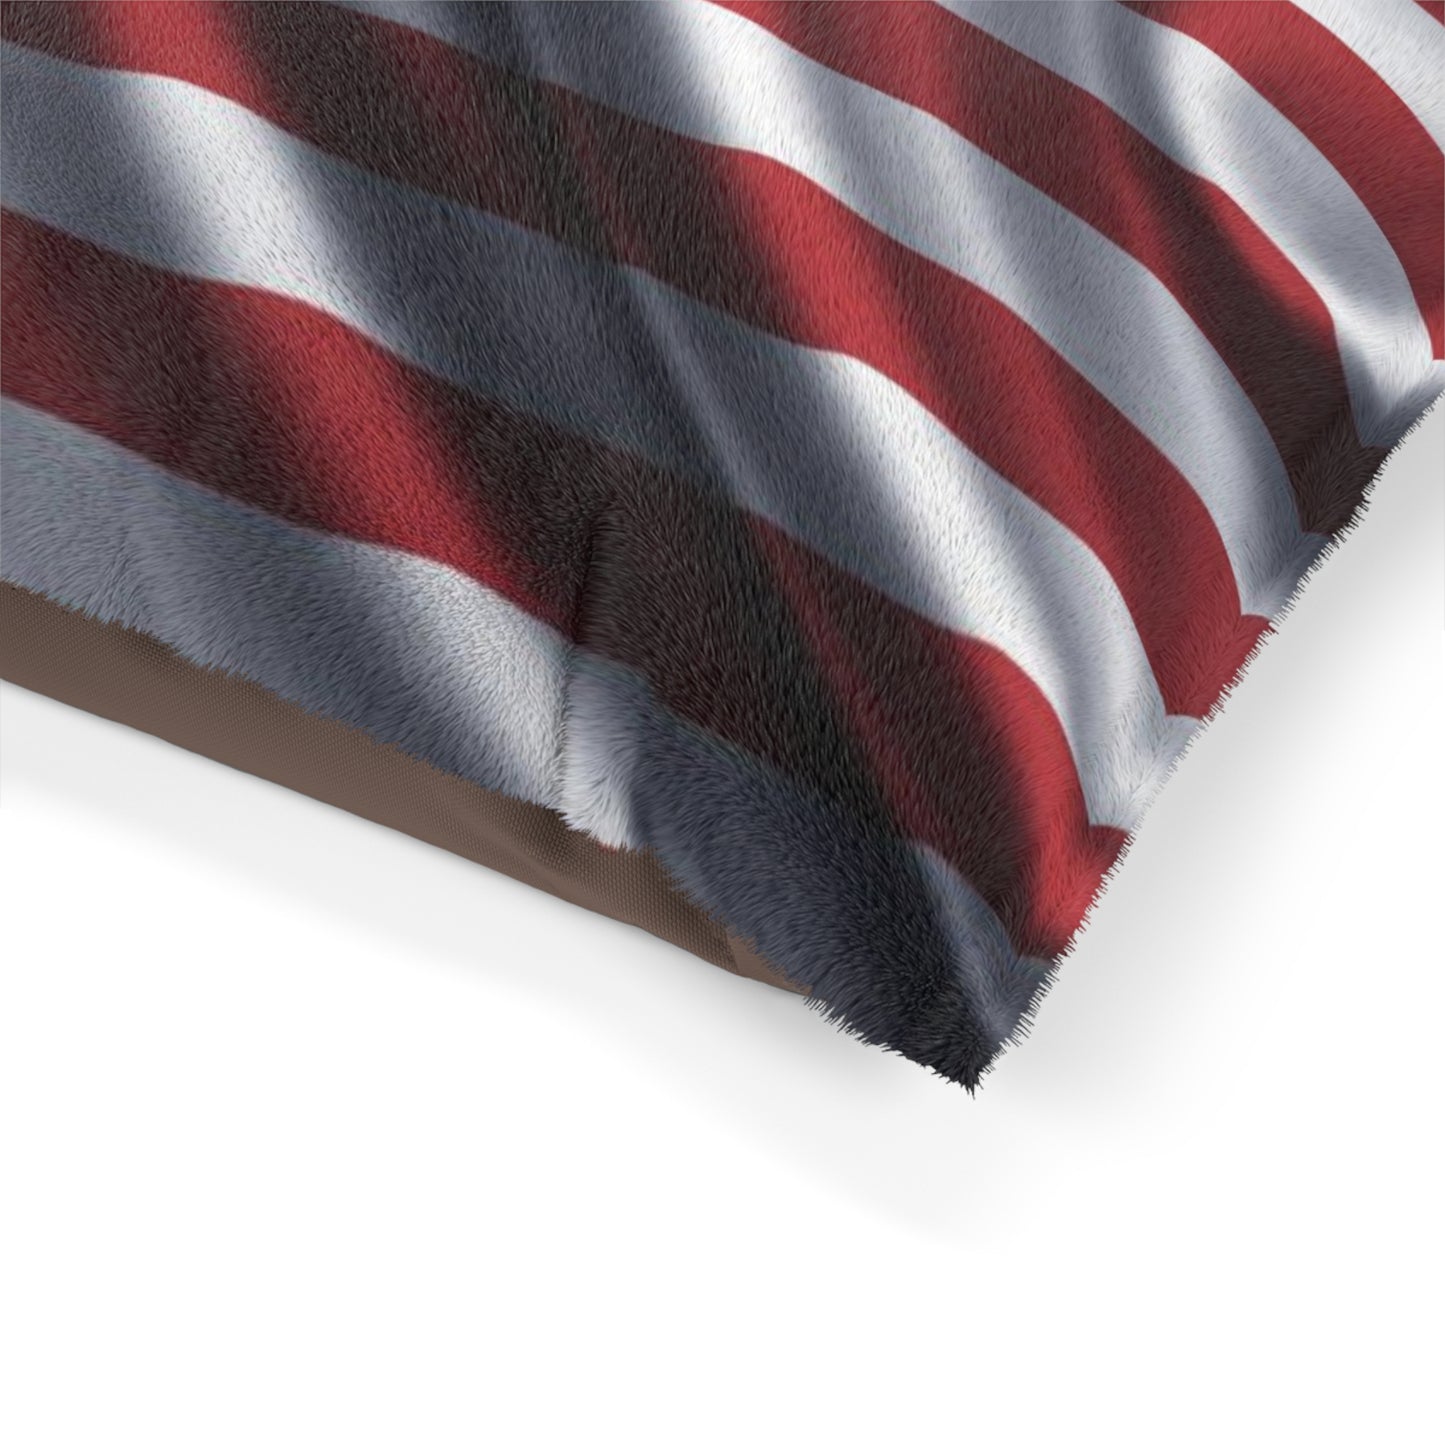 American Flag Pet Bed